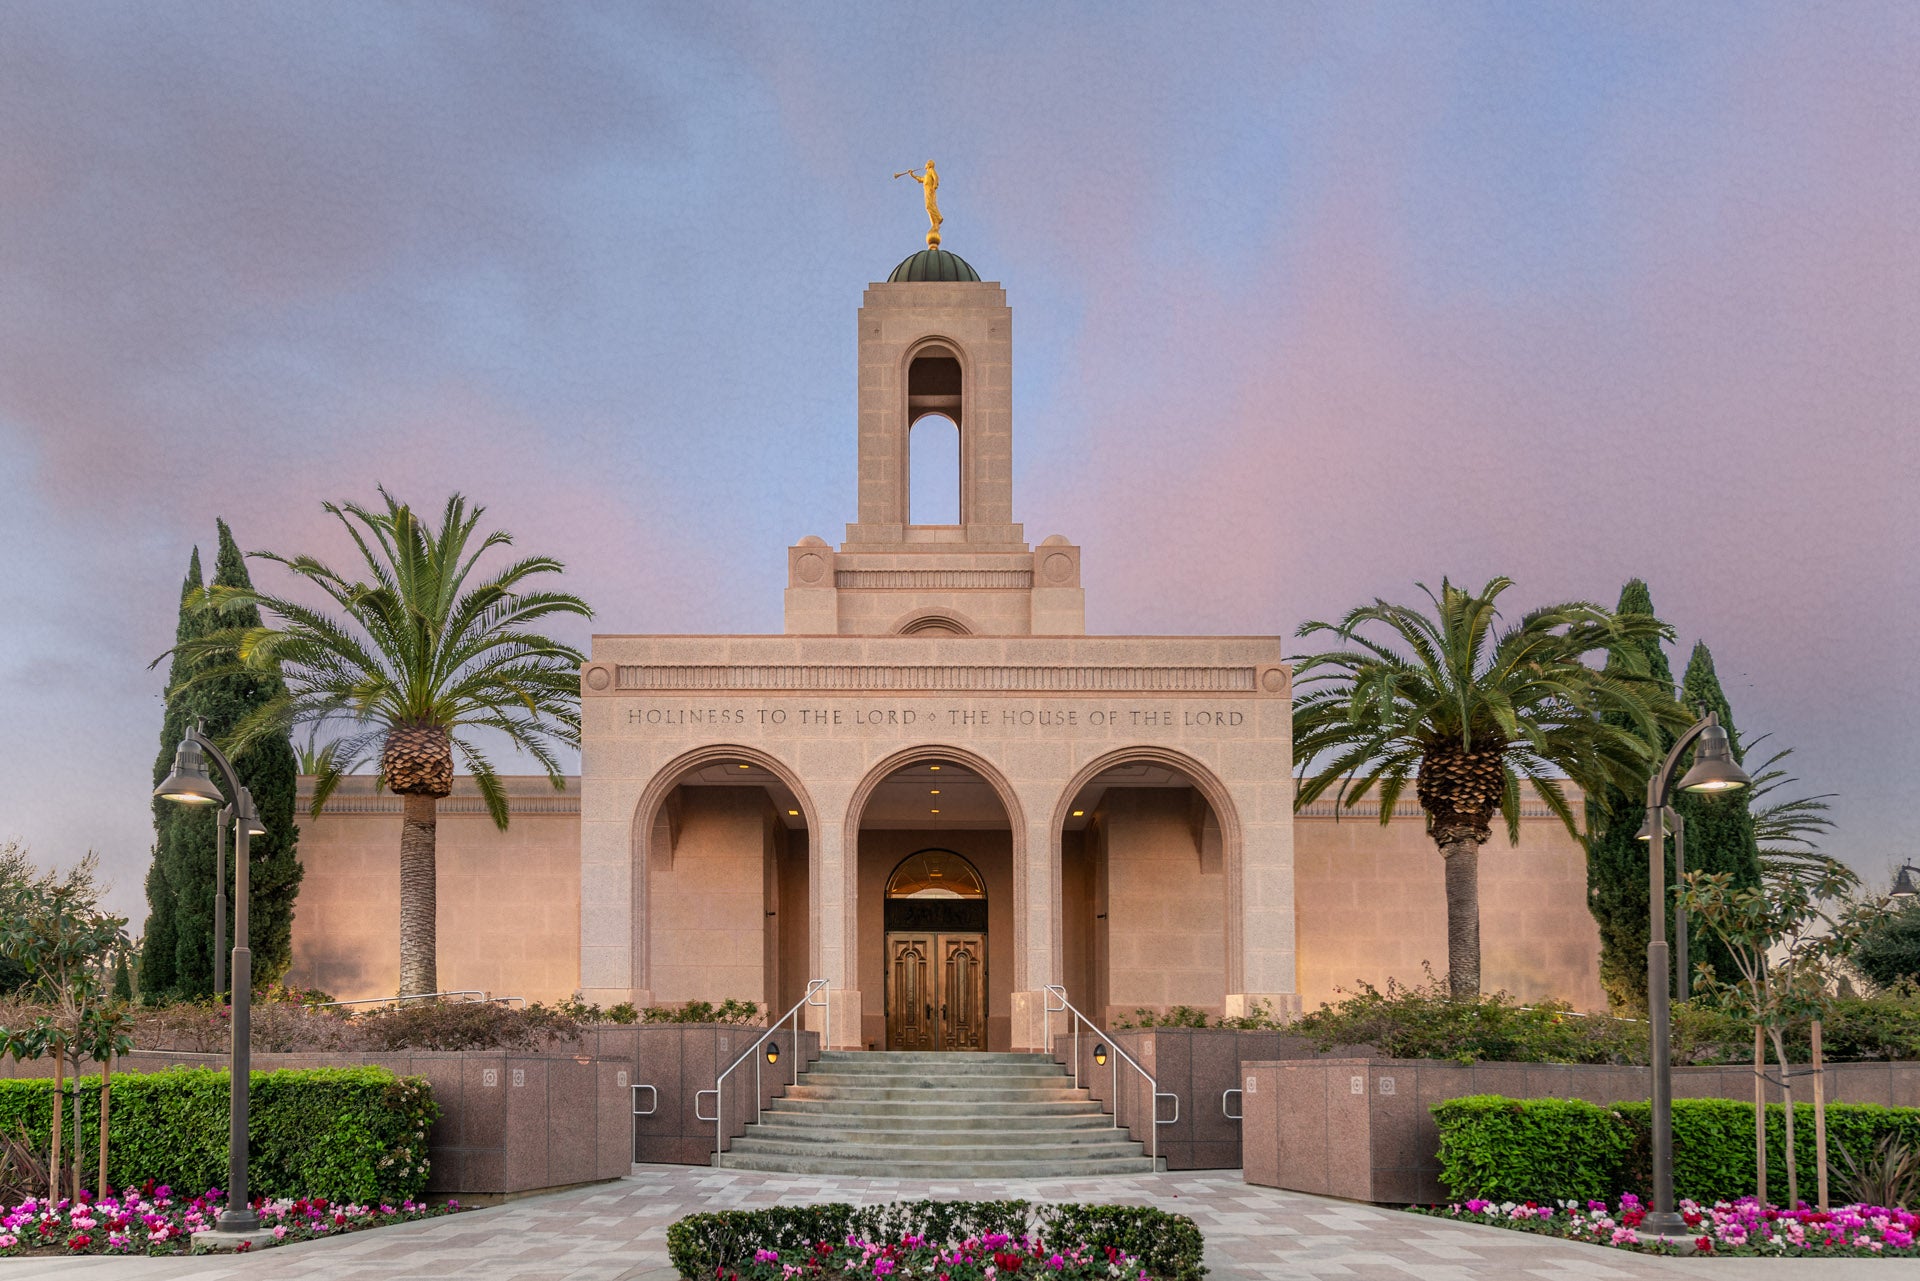 Newport Beach Temple - A House of Peace by Robert A Boyd